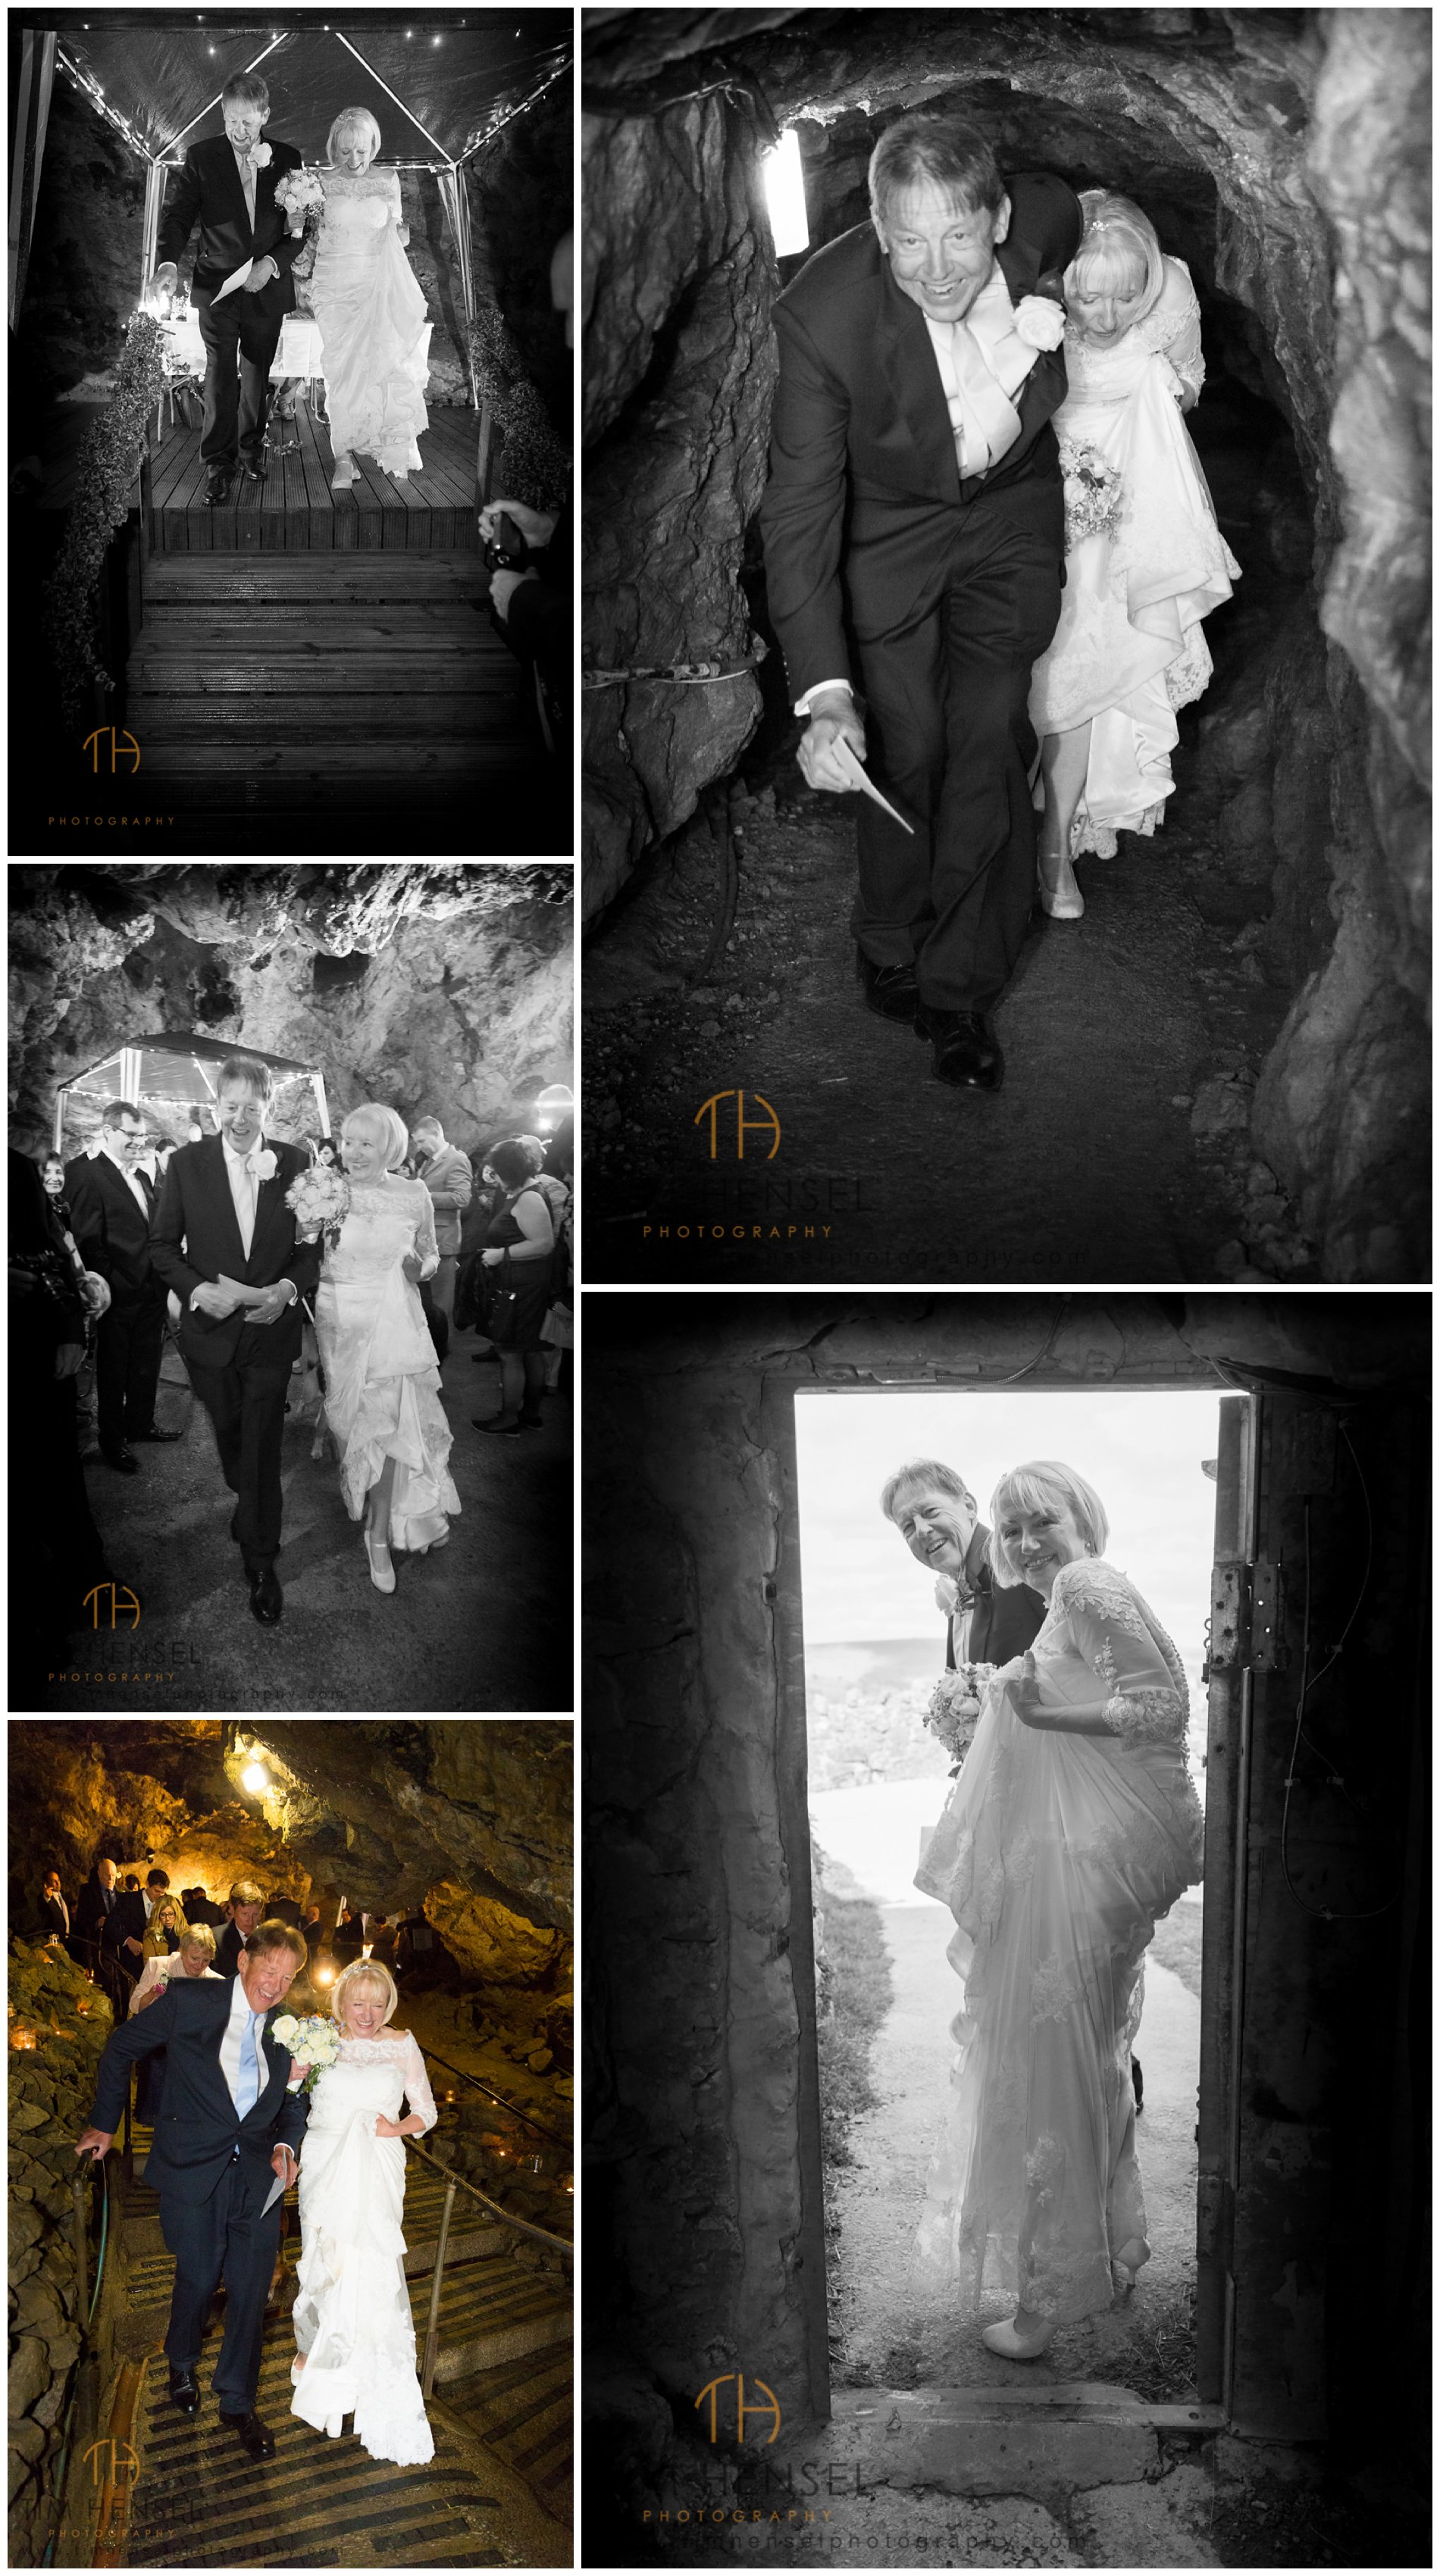 Wedding photography in treak cliff cavern at Castleton in Derbyshire